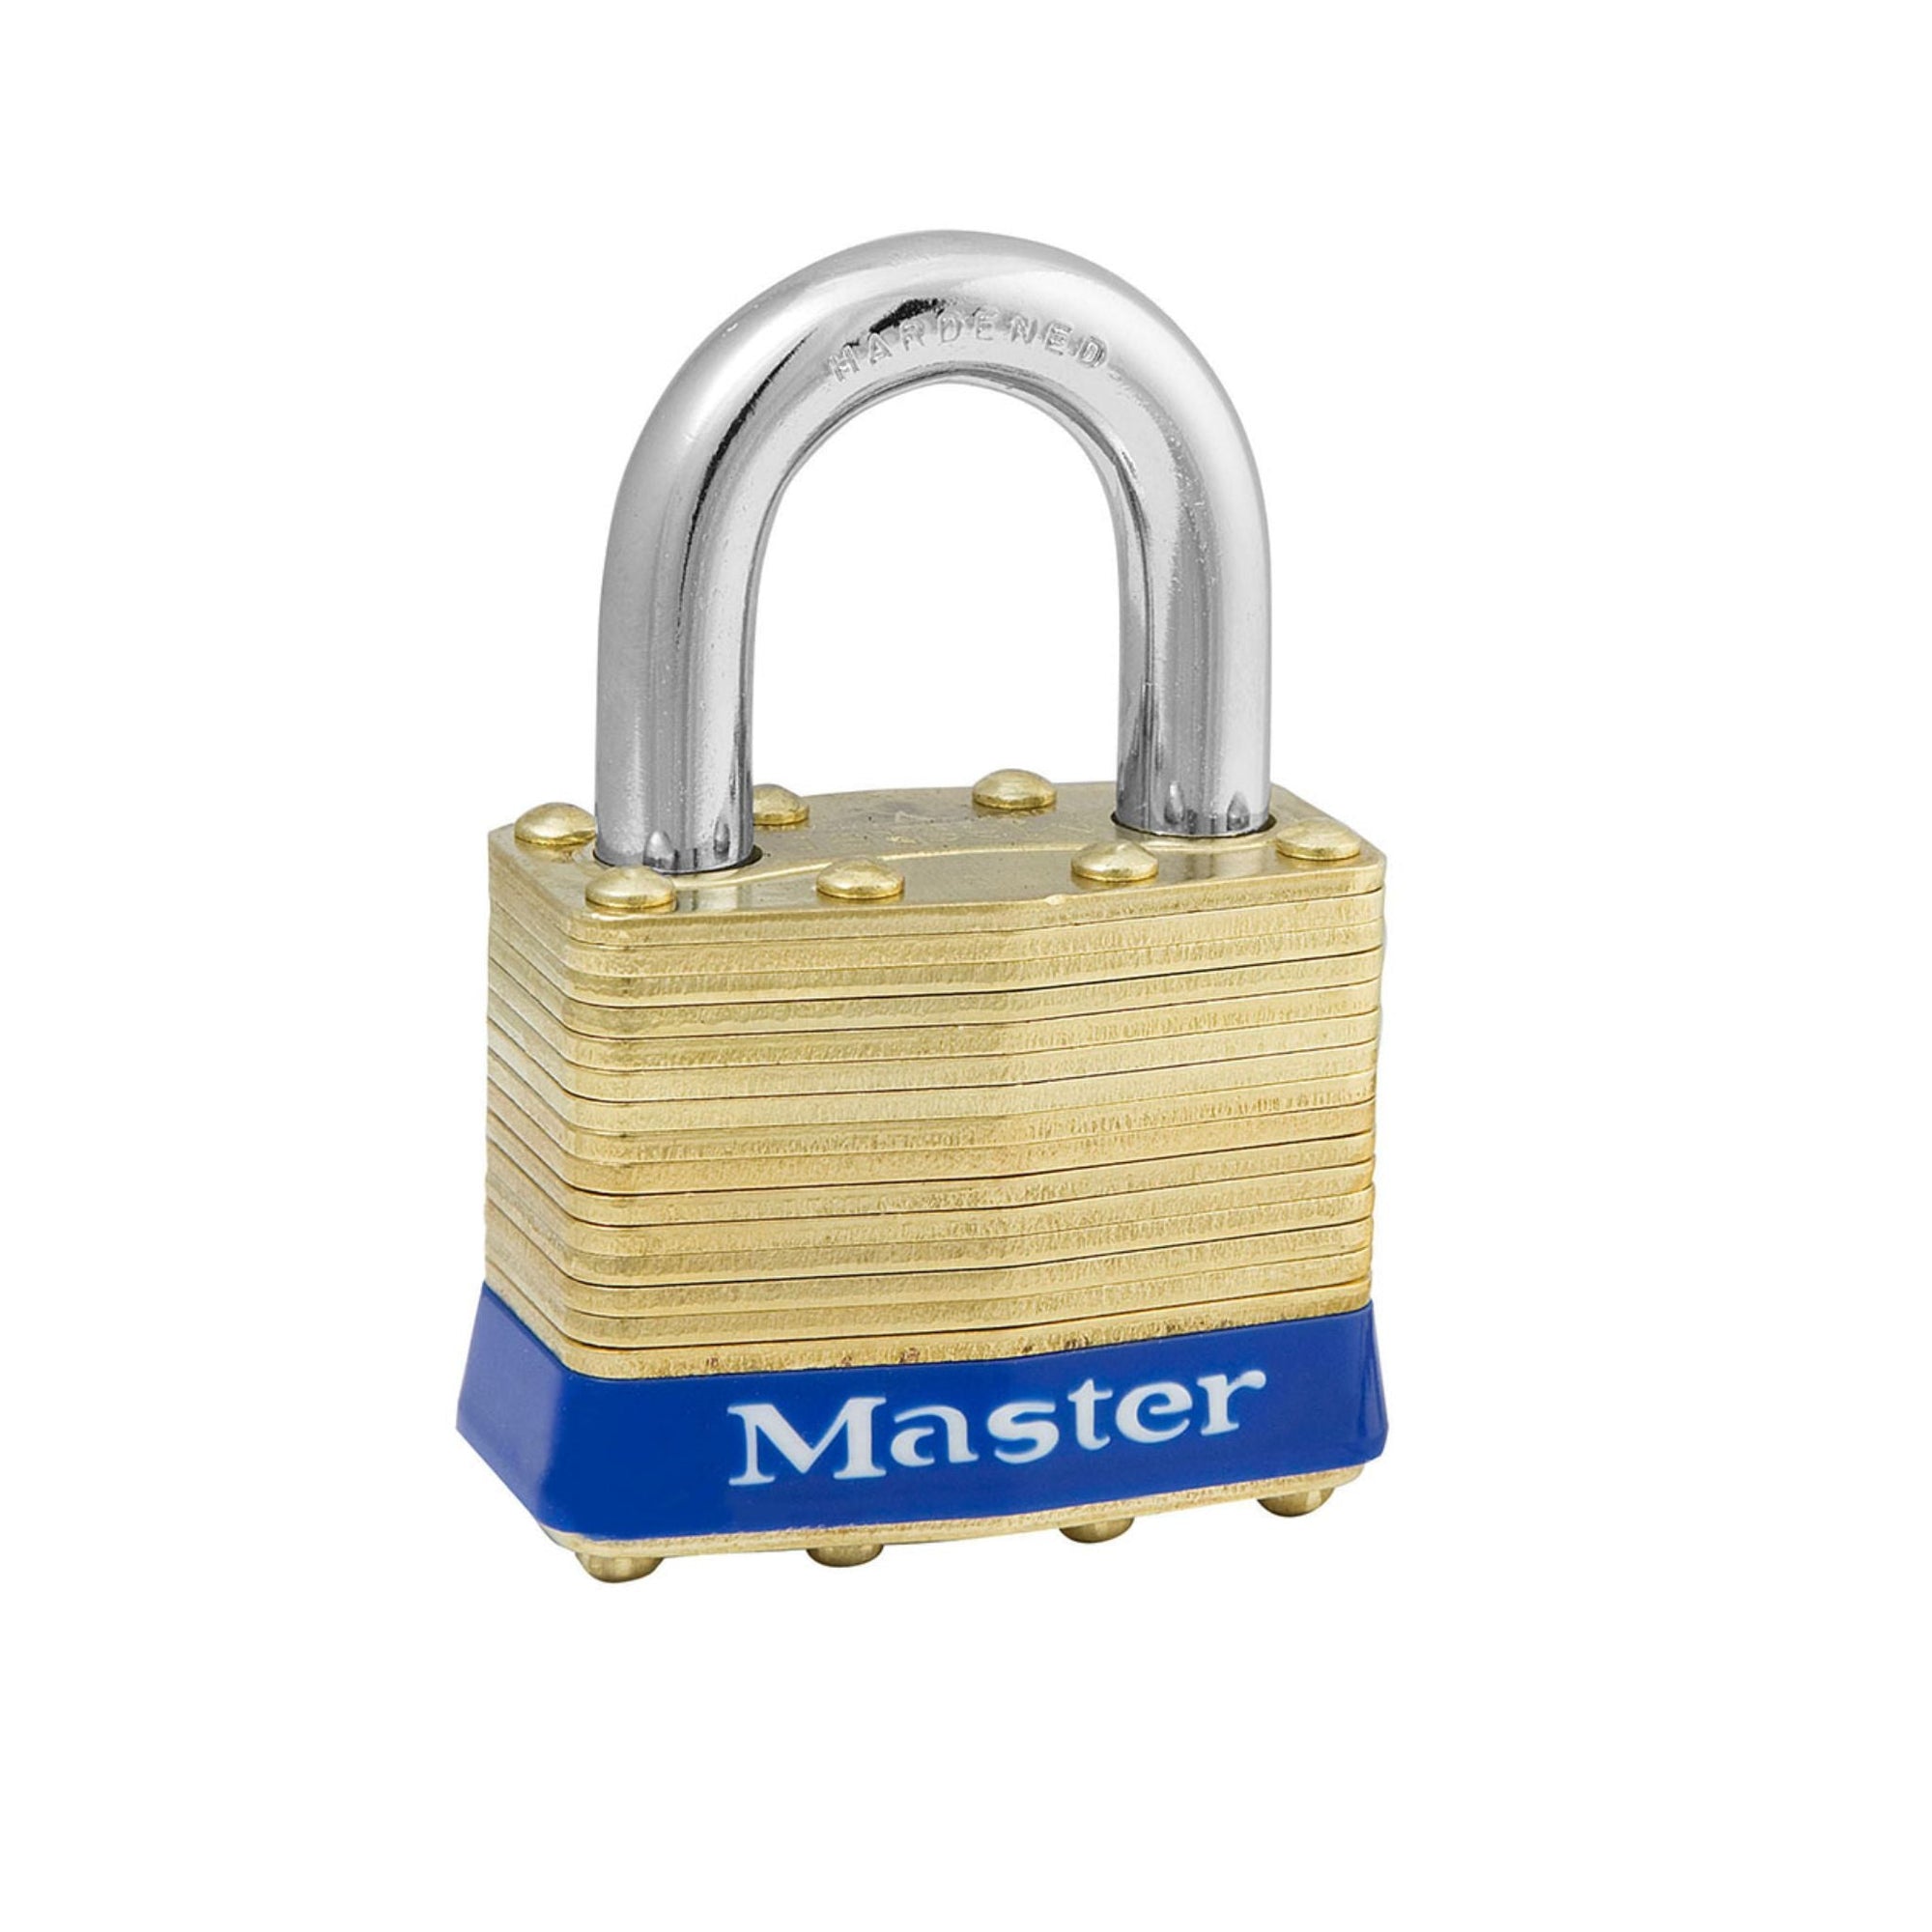 Master Lock 2KA 0308 Lock Laminated brass No. 2 Series Padlock Keyed to Match Existing Key Number KA0308 - The Lock Source